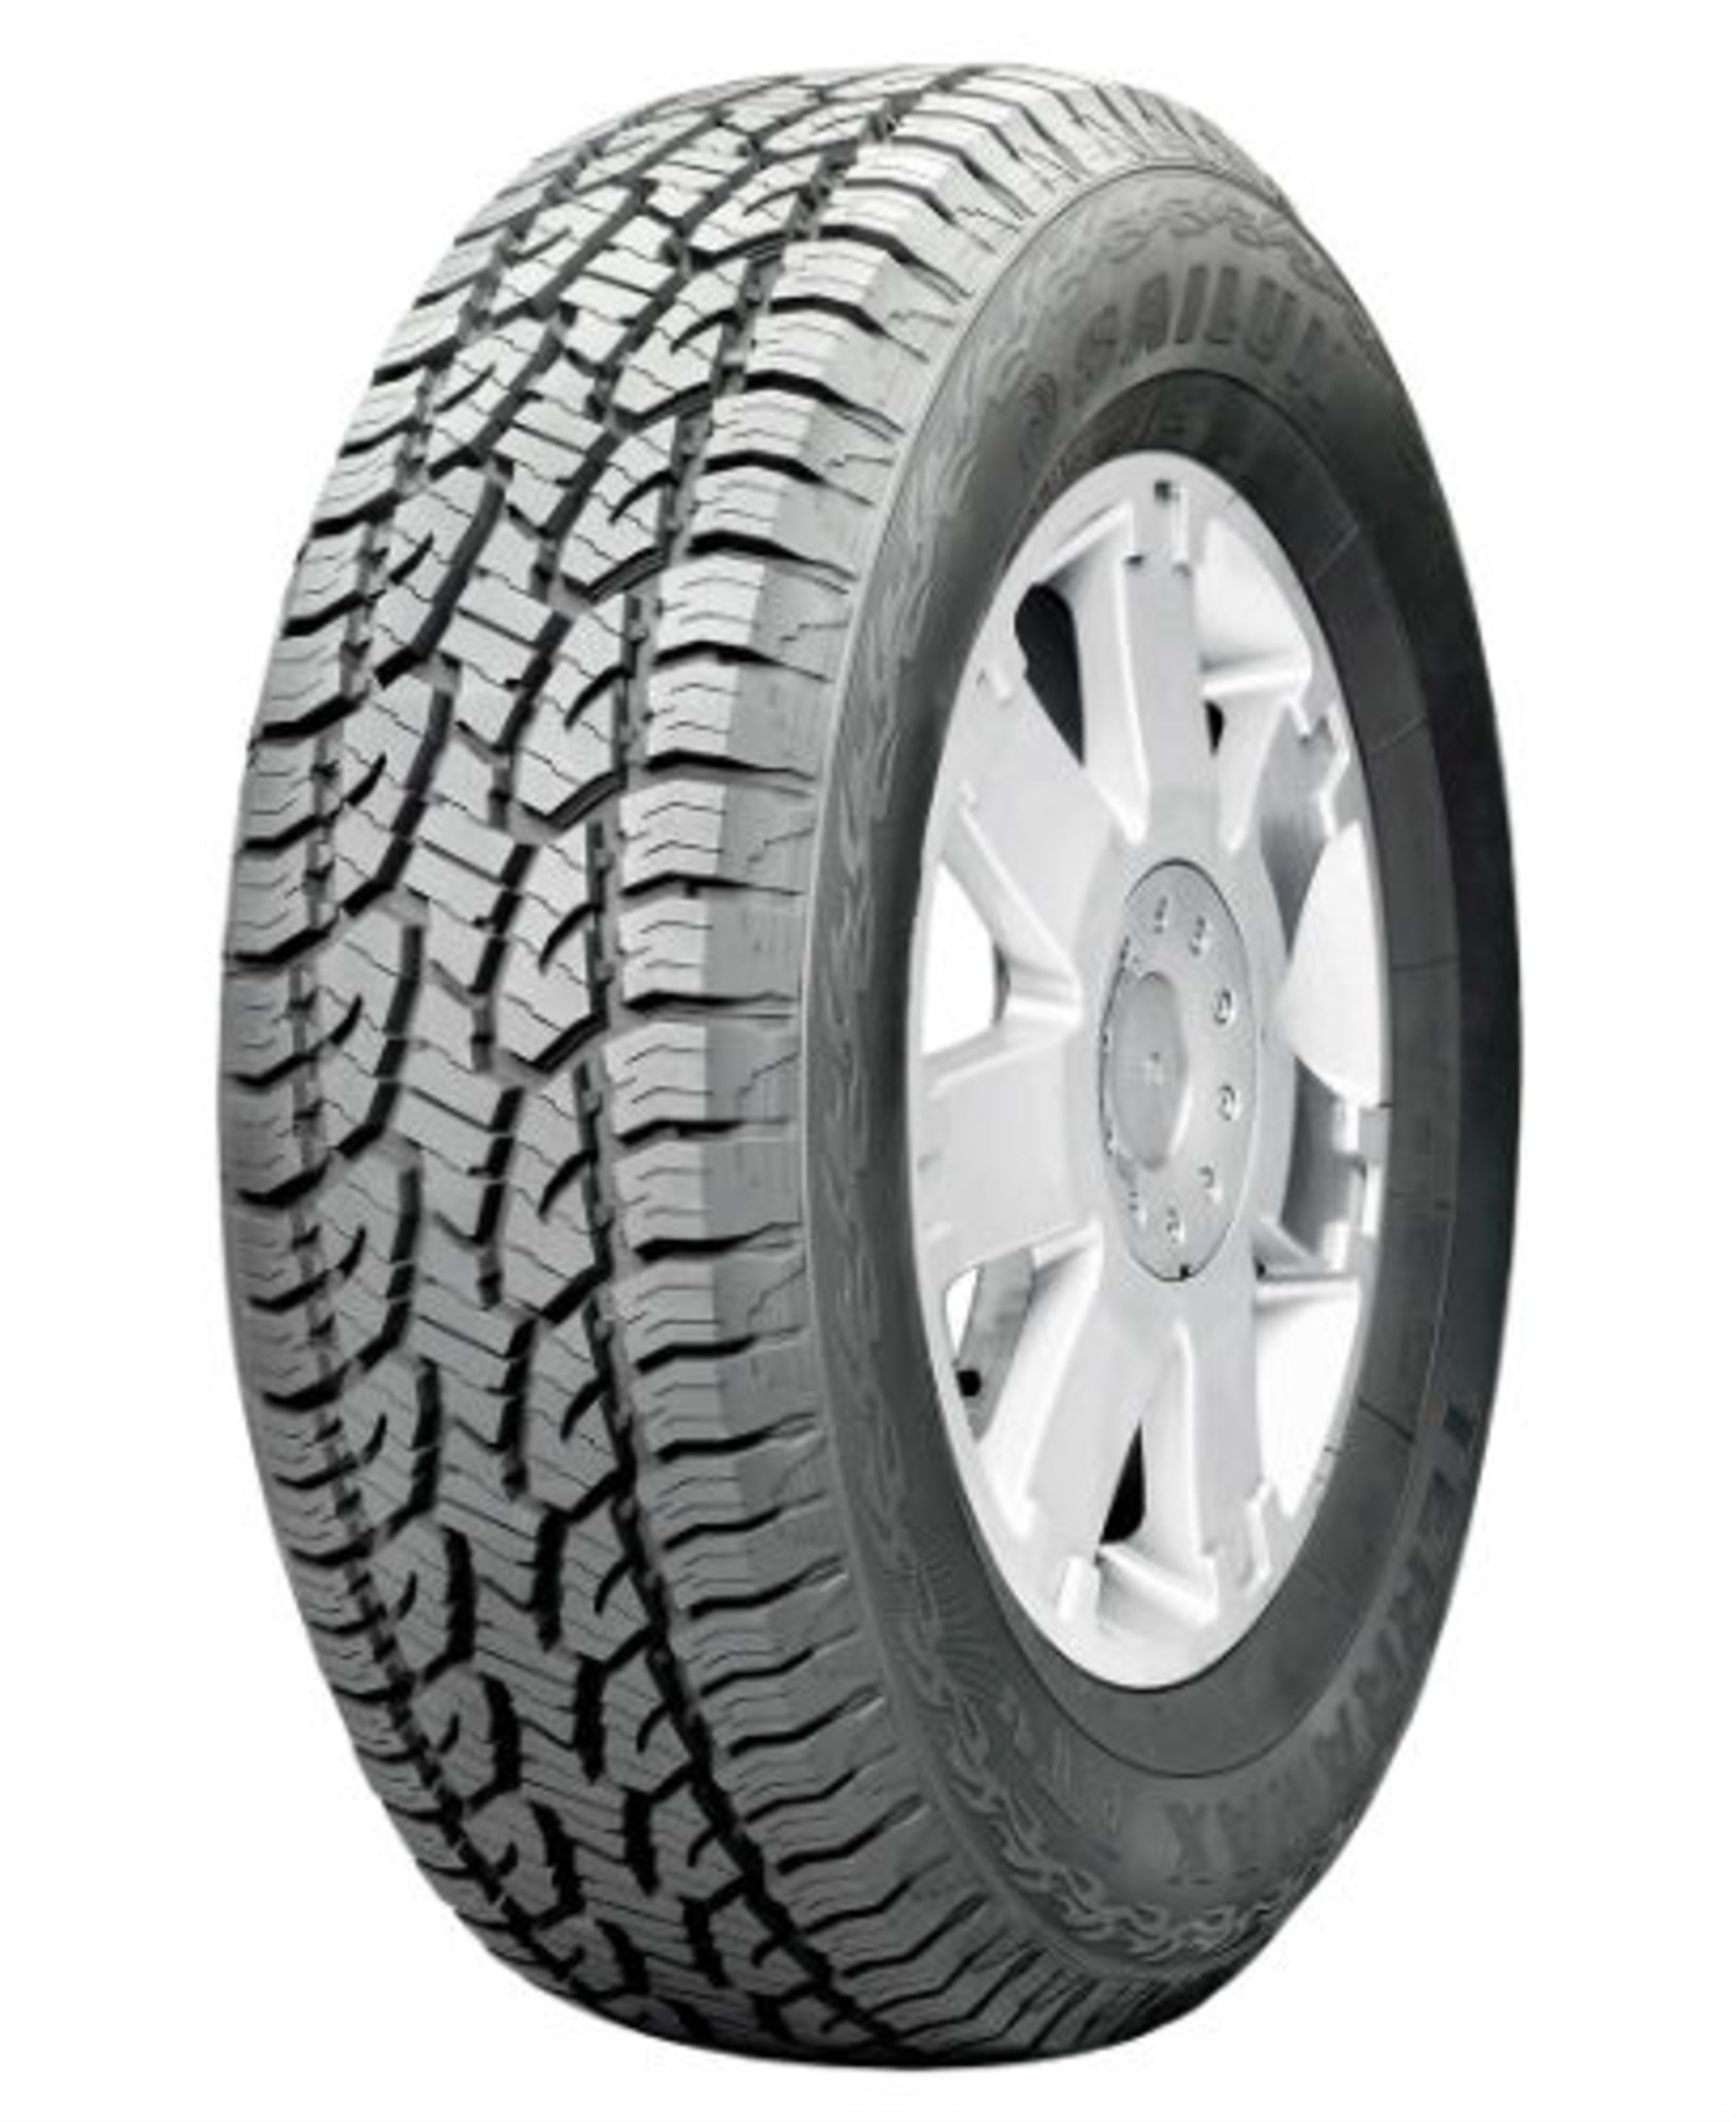 Buy Sailun Terramax A T 4S Tires Online SimpleTire